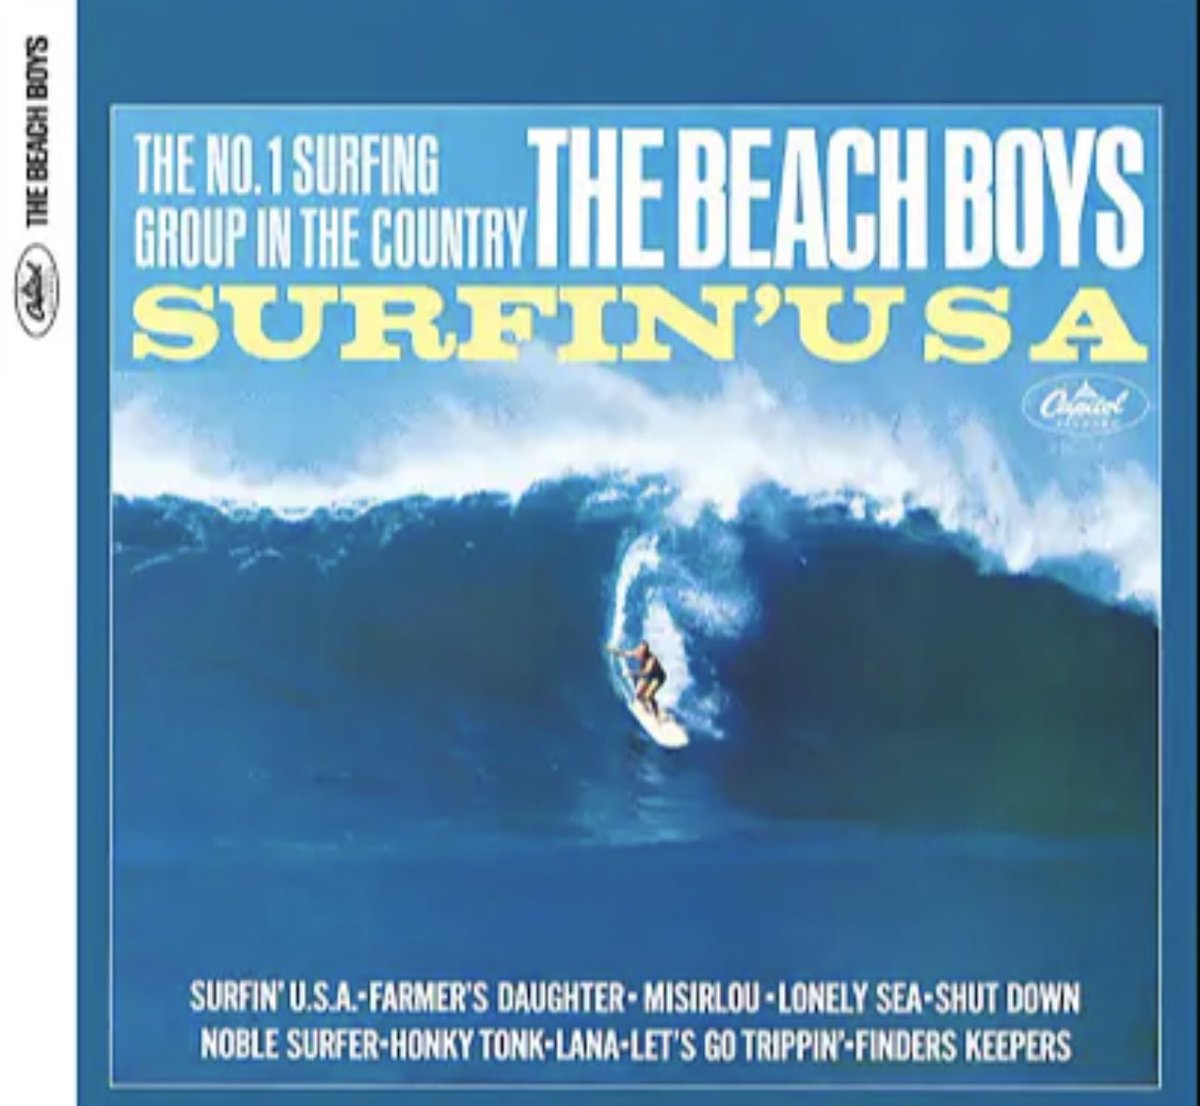 #AlliterationsAllAugust

Surfin’ USA - The Beach Boys

🎶You'd see 'em wearing their baggies
Huarachi sandals too
A Bushy, Bushy Blonde Hairdo
Surfin' USA🎶

youtu.be/KcZn05qxVgg?si…